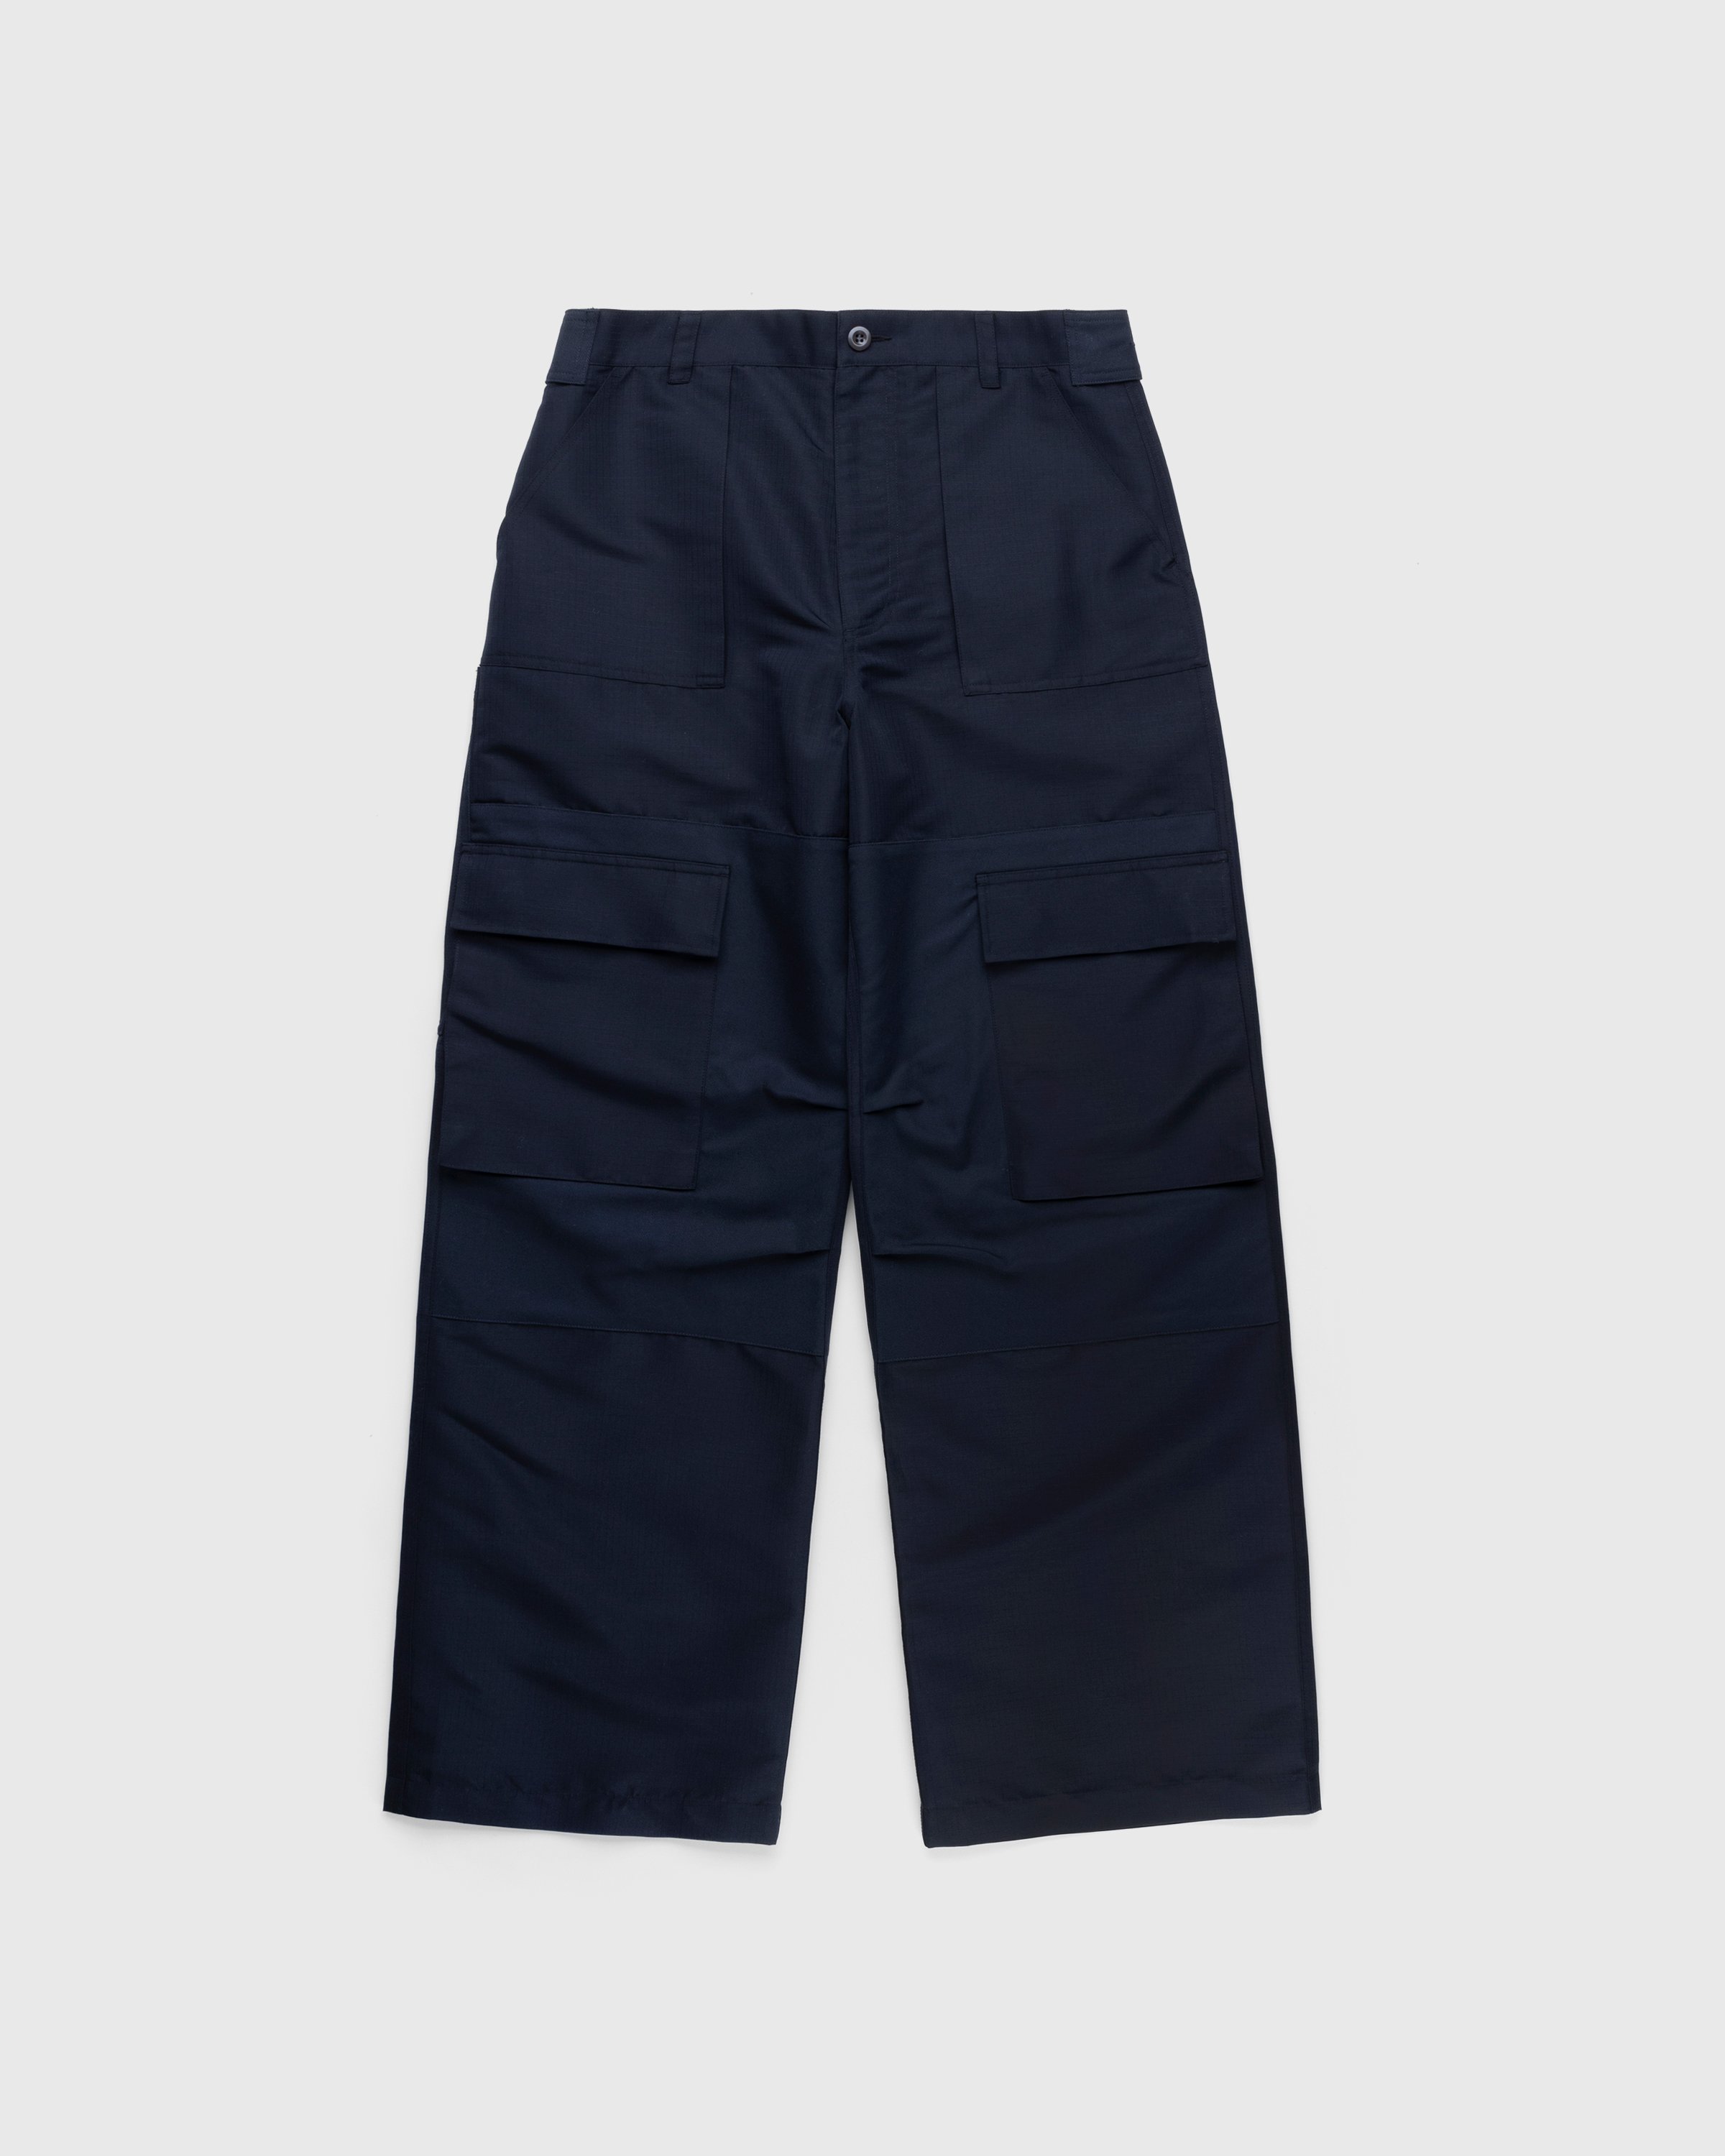 Acne Studios - Ripstop Cargo Trousers Dark Blue - Clothing - Black - Image 1